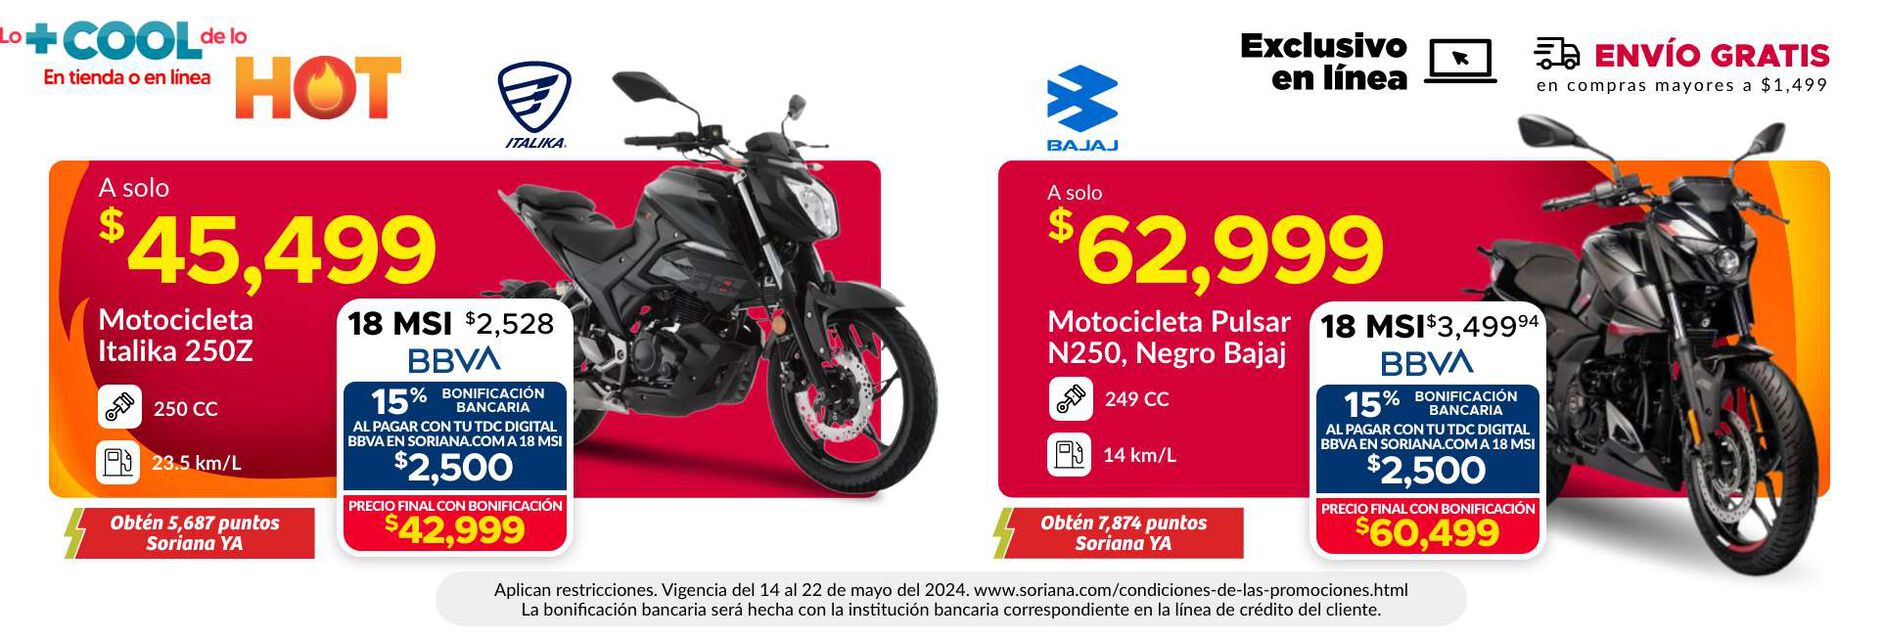 Motocicleta Italika 250Z a sólo $45,499